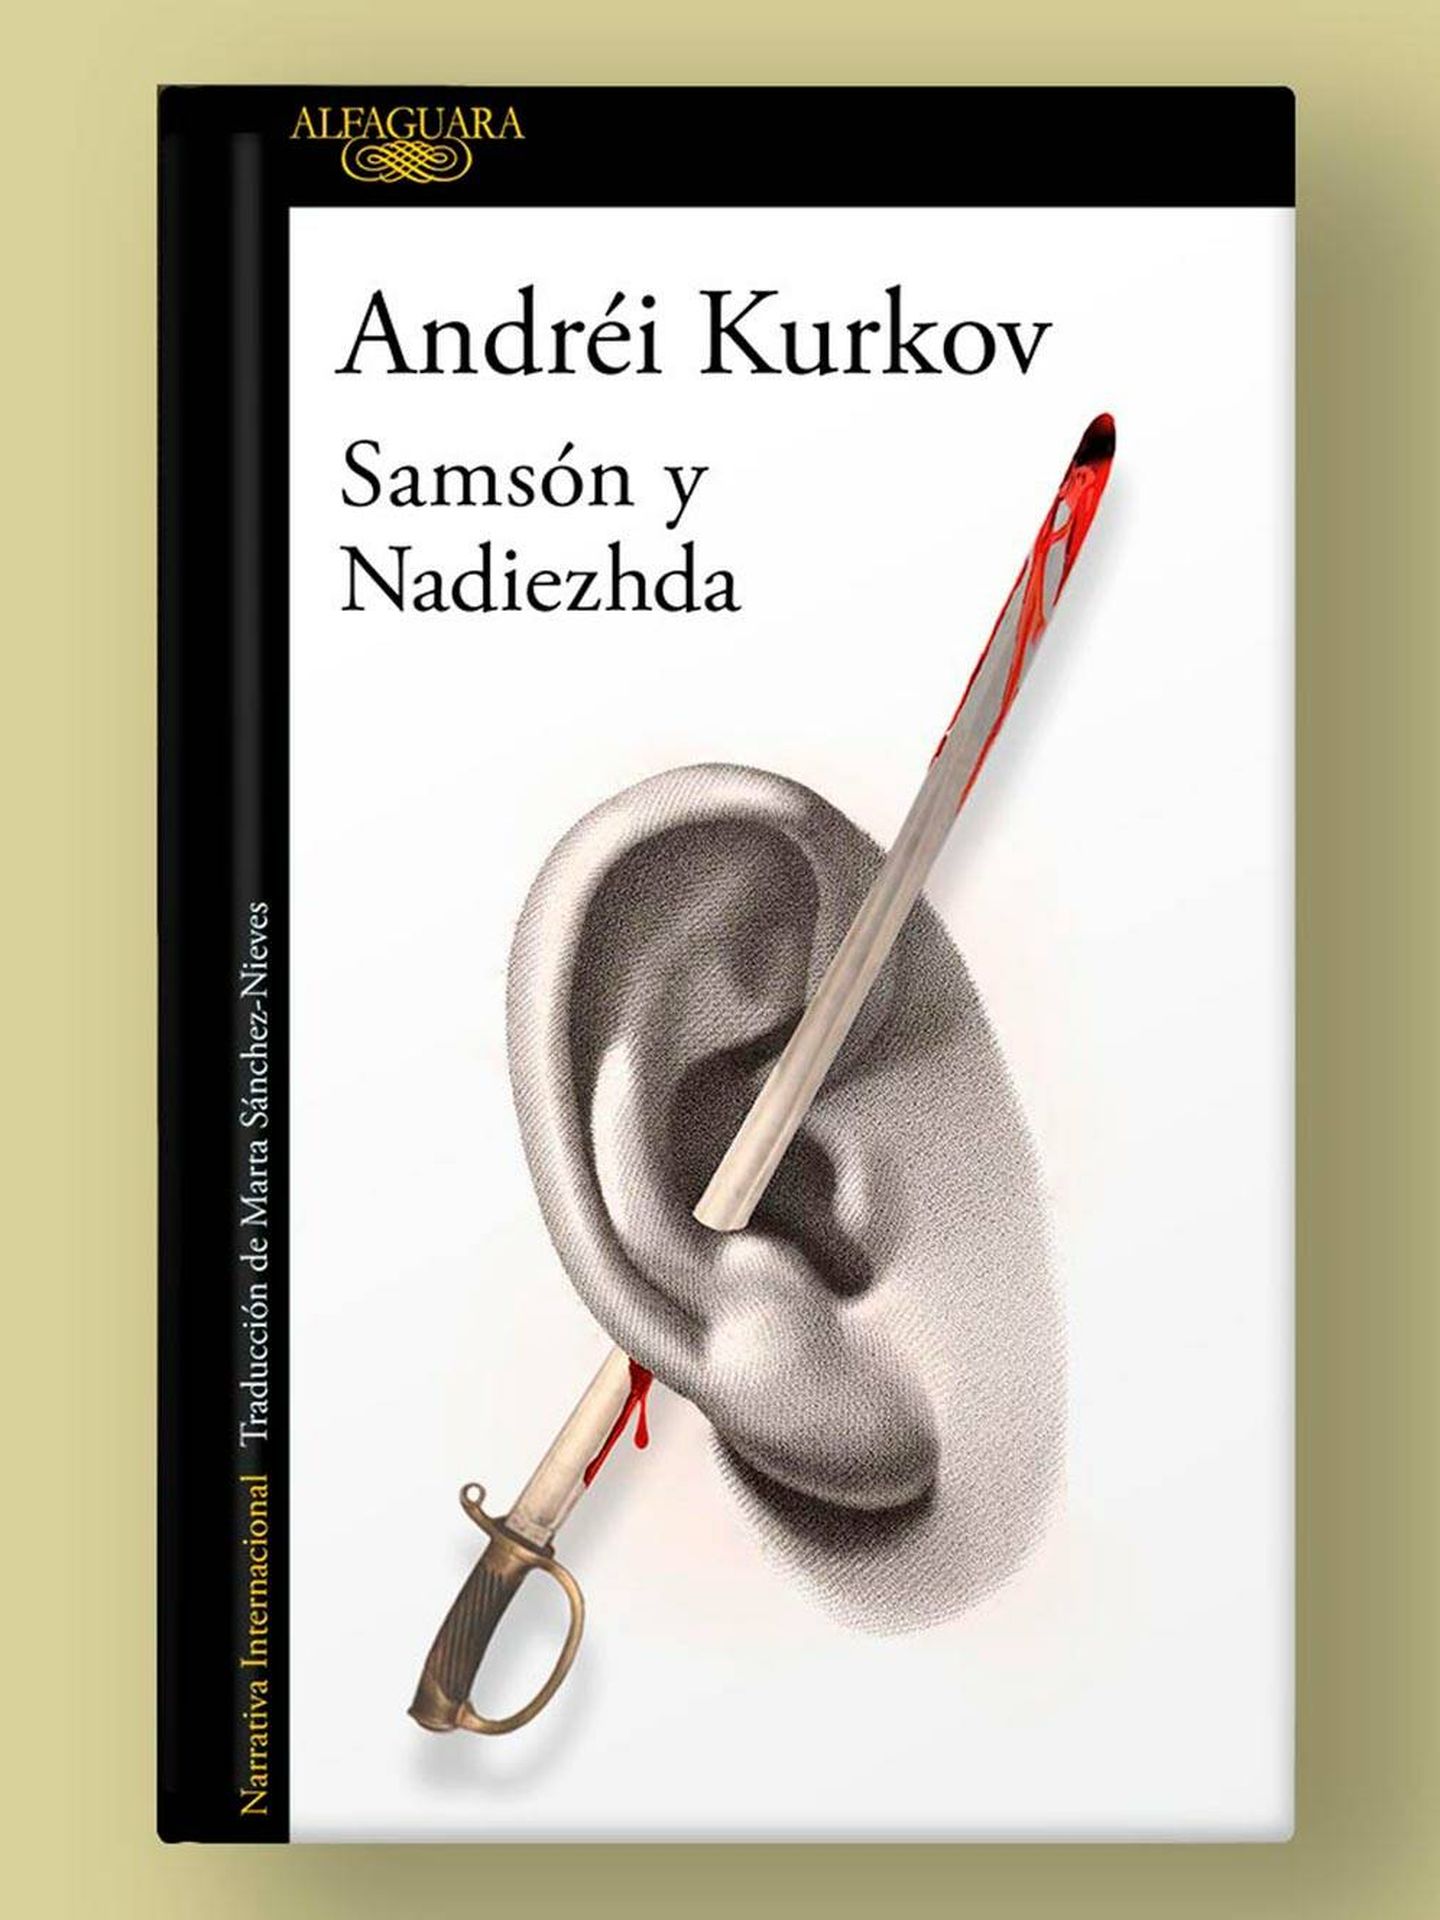 Portada de 'Samsón y Nadiezhda', de Andréi Kurkov. 